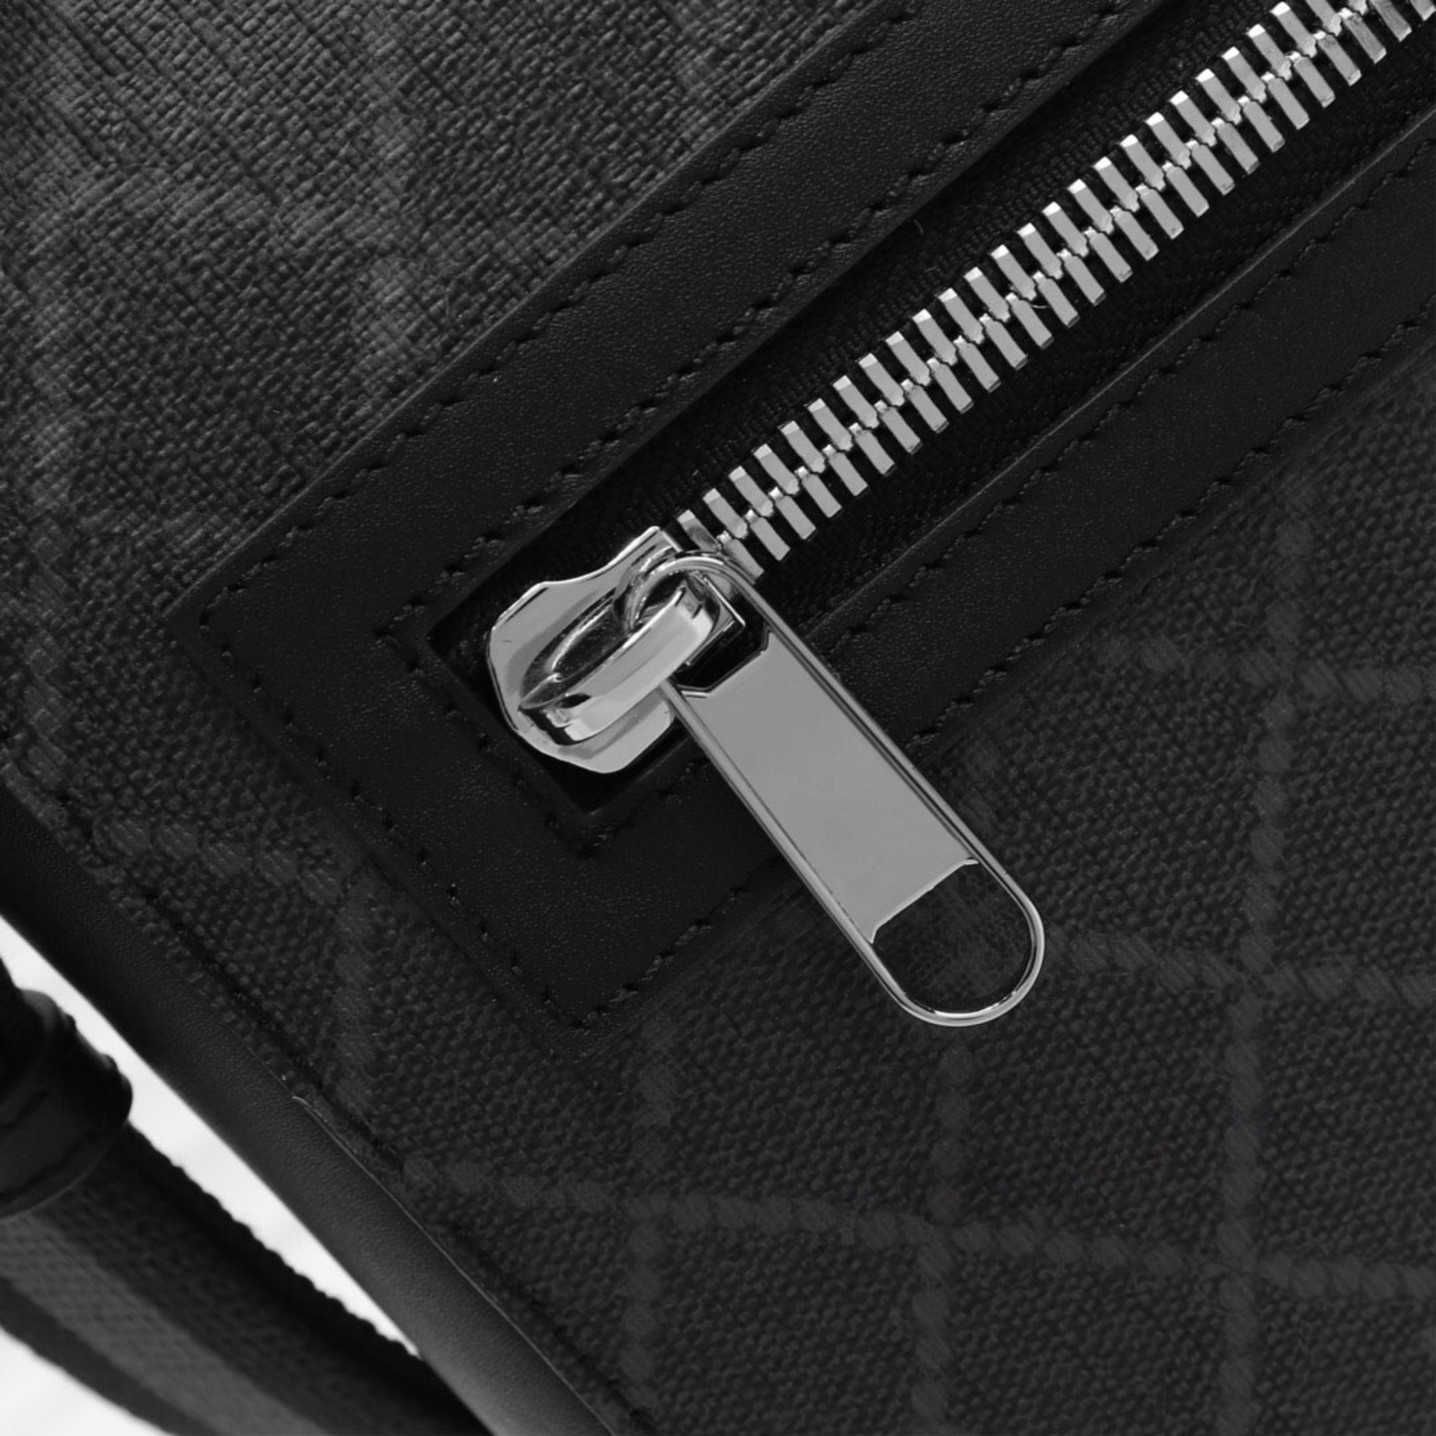 21 23 4 5cm Messenger Bag Messengers Bags Men Crossbody Handbags Cross Body  Purses Leather Clutch Backpack Wallet Fashion298r From Sugaron54, $51.31